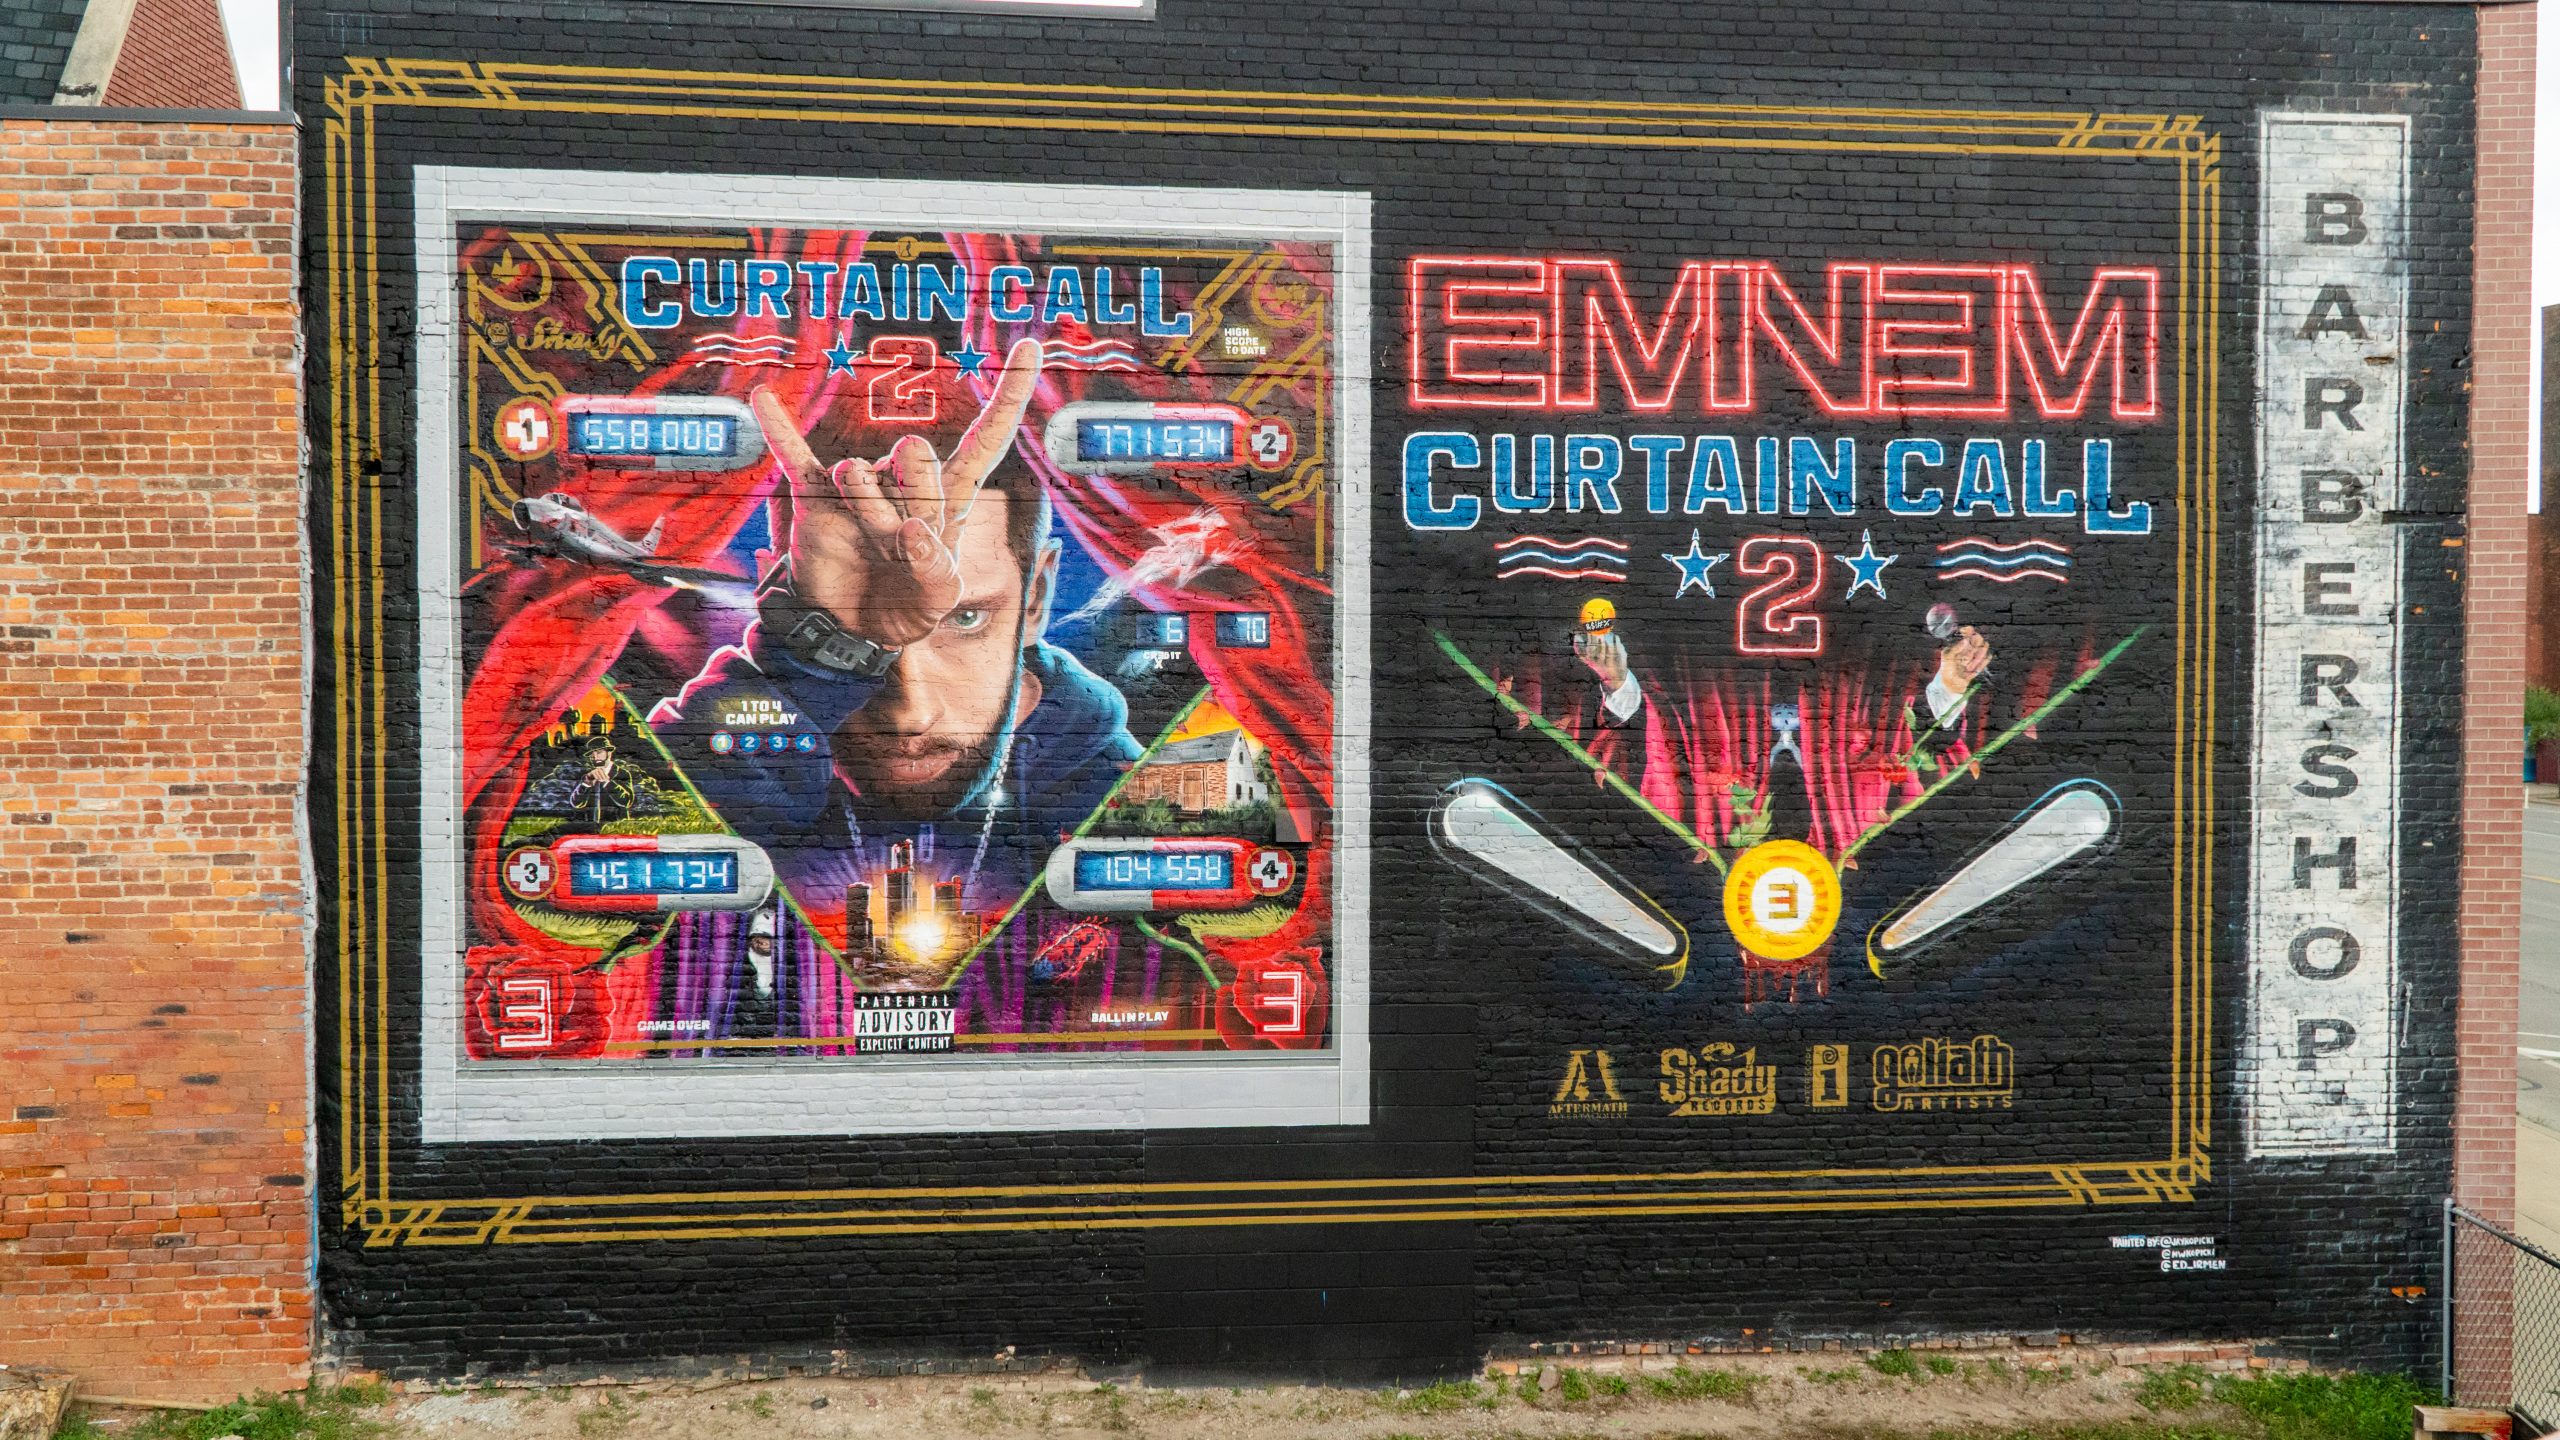 Eminem curtain call. Eminem Curtain Call 2. Эминема Curtain Call. Eminem. Curtain Call. The Hits. 2005. Альбомы Эминема Curtain Call.